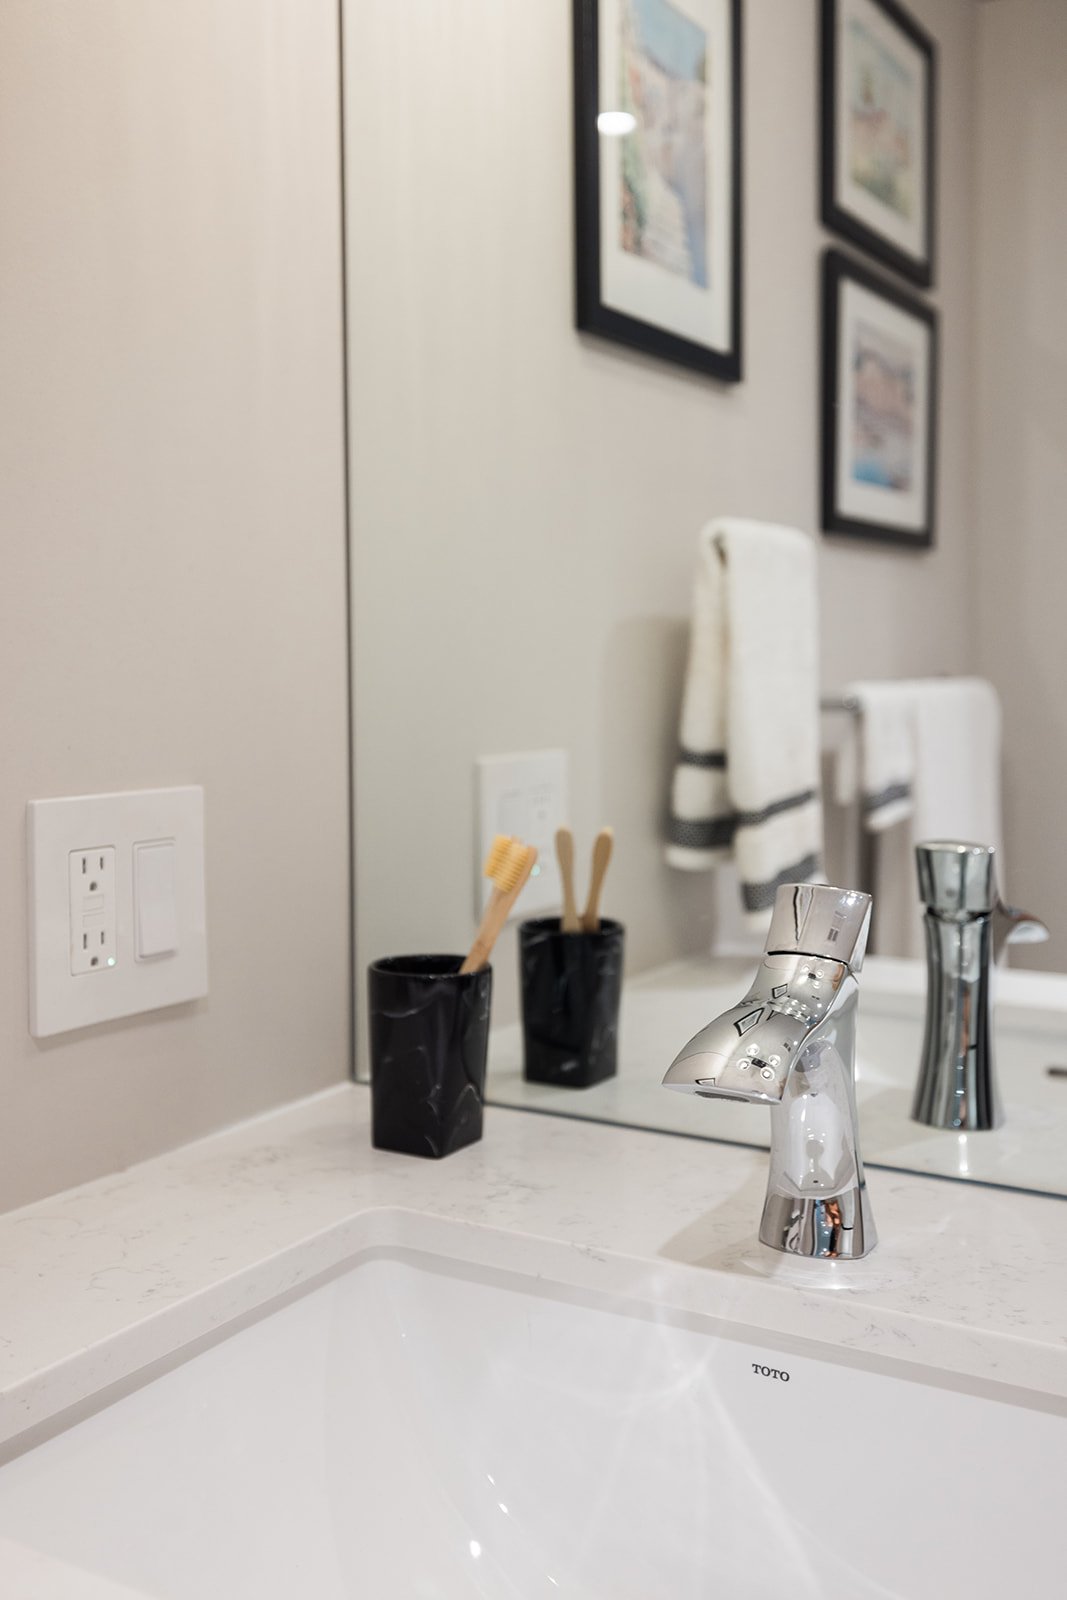 Bathroom vanity details with stainless steel faucet in GTA condo bathroom renovation